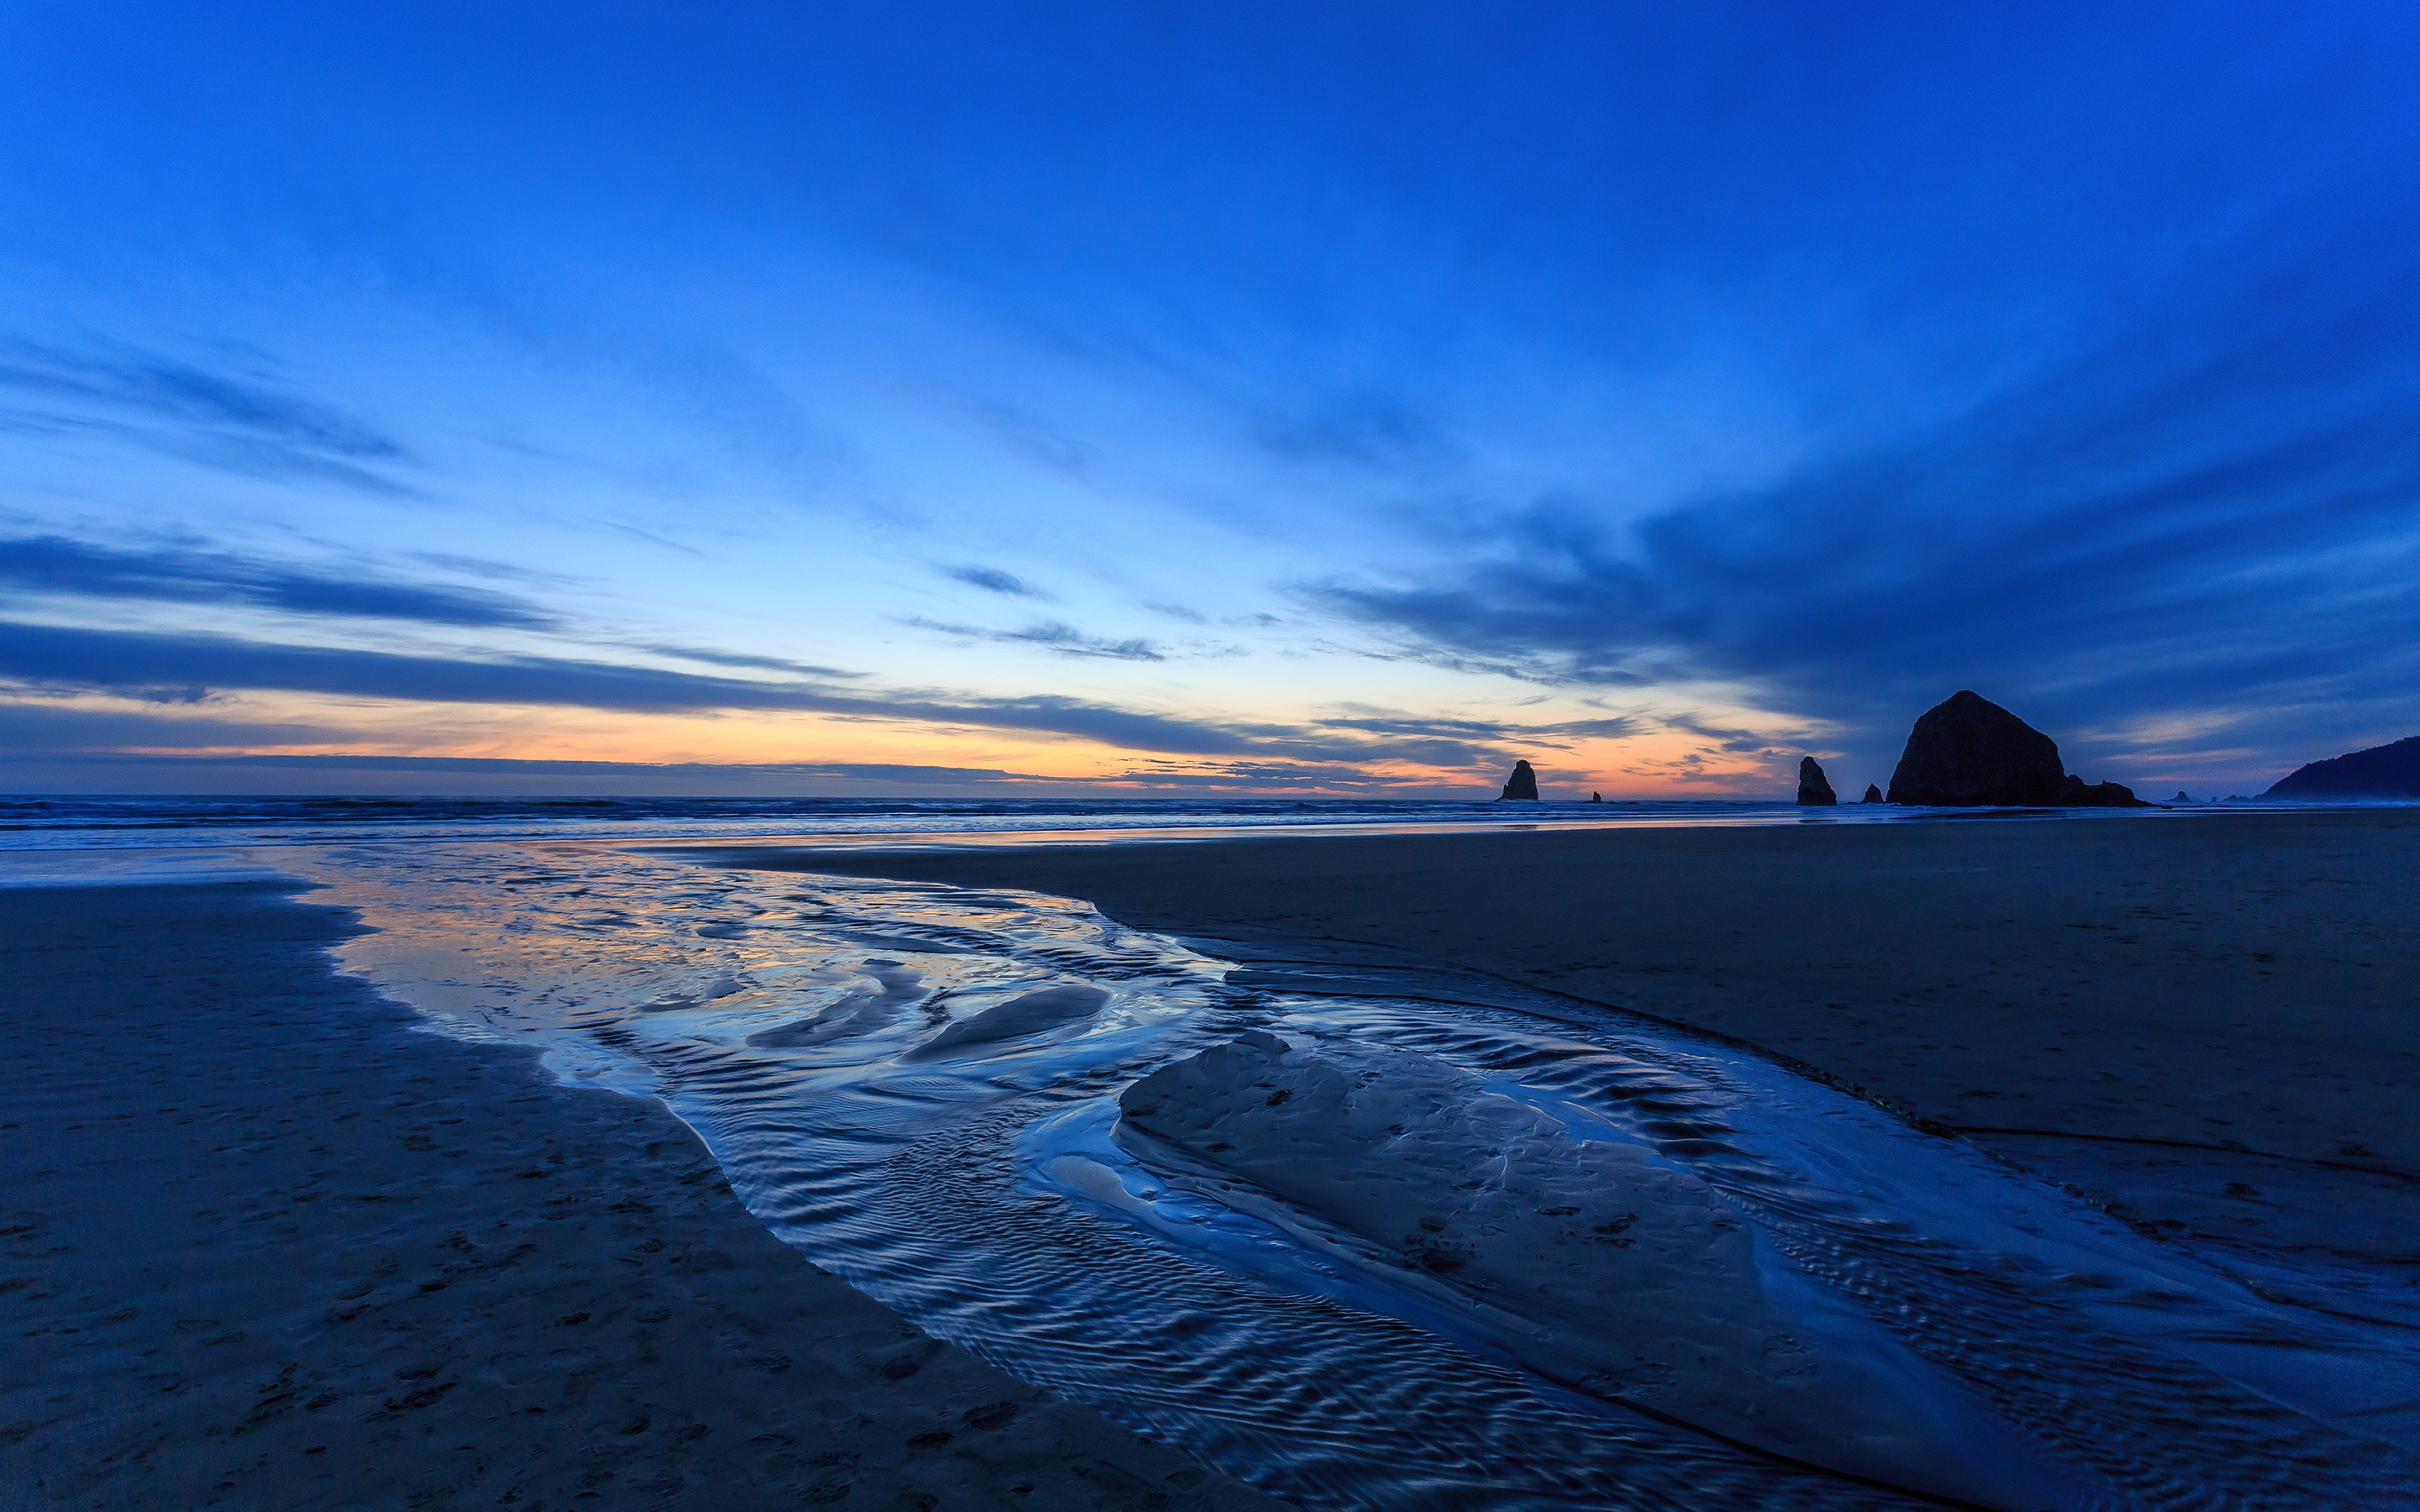 Sunset Oregon Beach for 2880 x 1800 Retina Display resolution